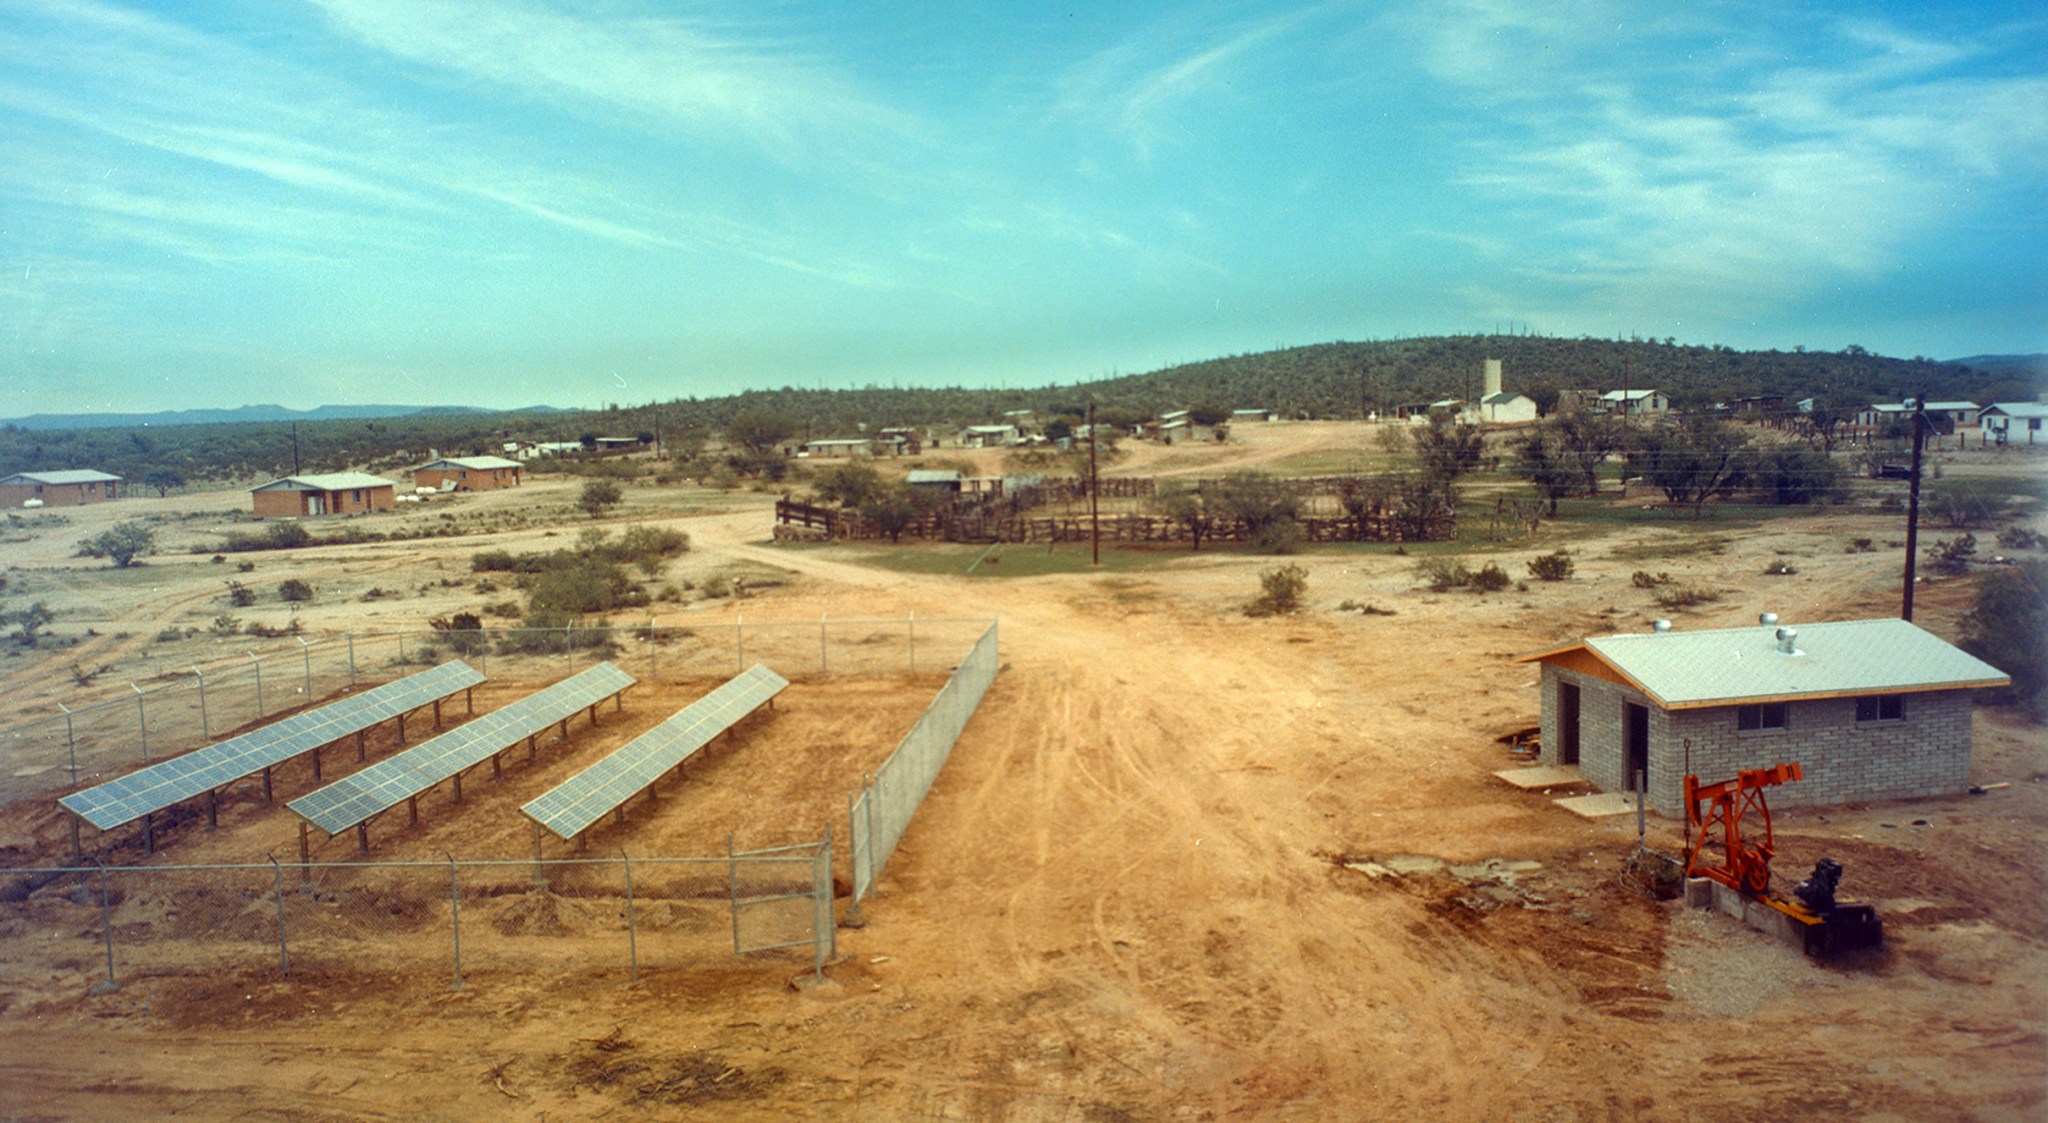 Arizona village with rows of solar panels.